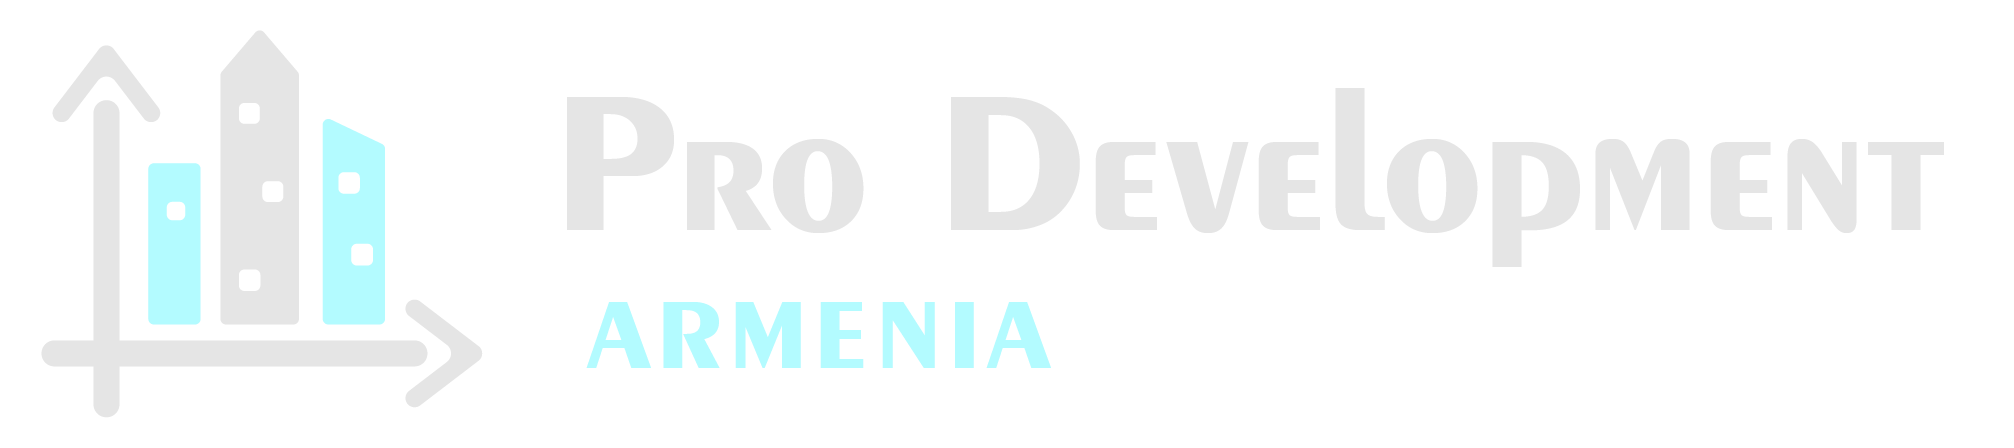 Pro Development Armenia